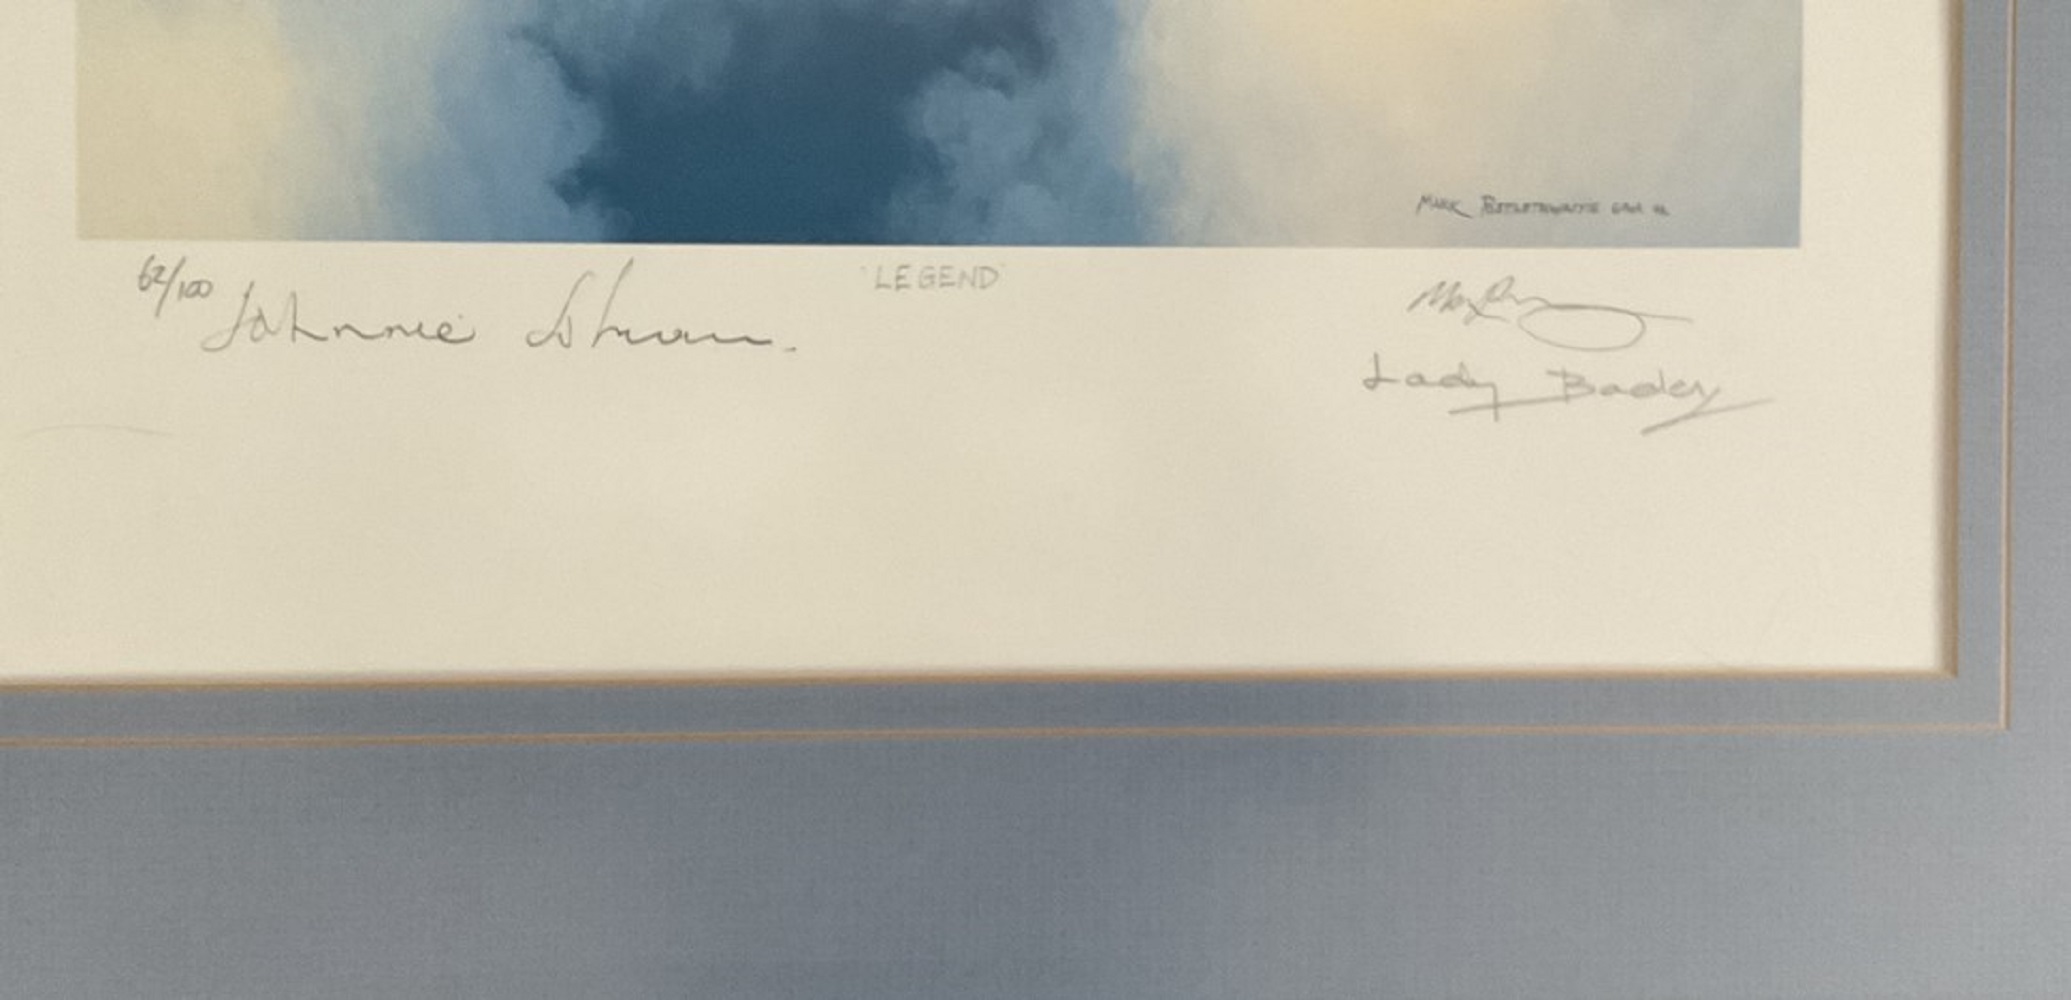 WW2 3 Signed Mark Postlethwaite Colour Print Titled Legend 62 of 100 Housed in a Presentation Frame. - Image 2 of 2